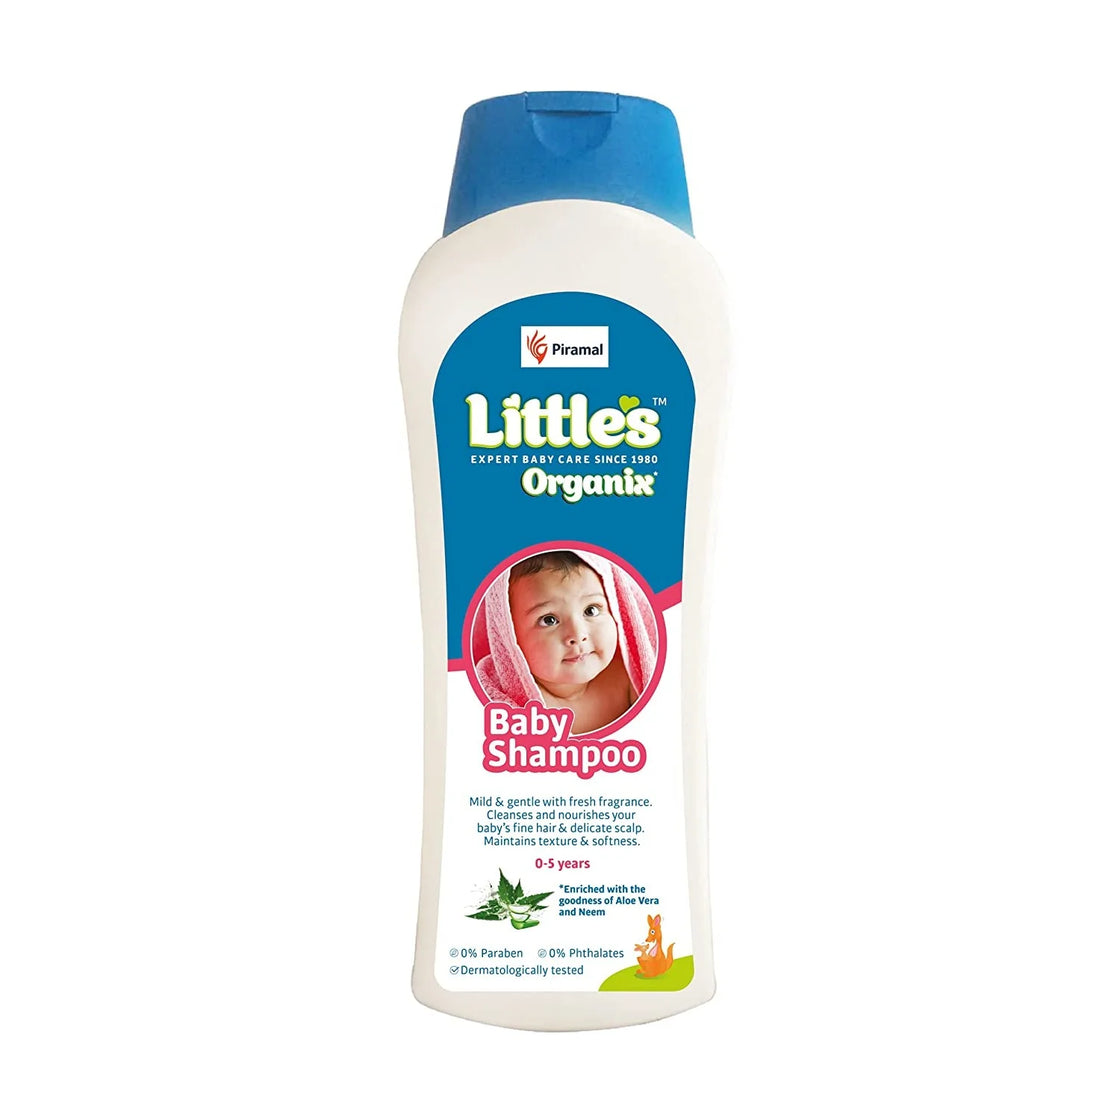 Little's Organix Baby Shampoo